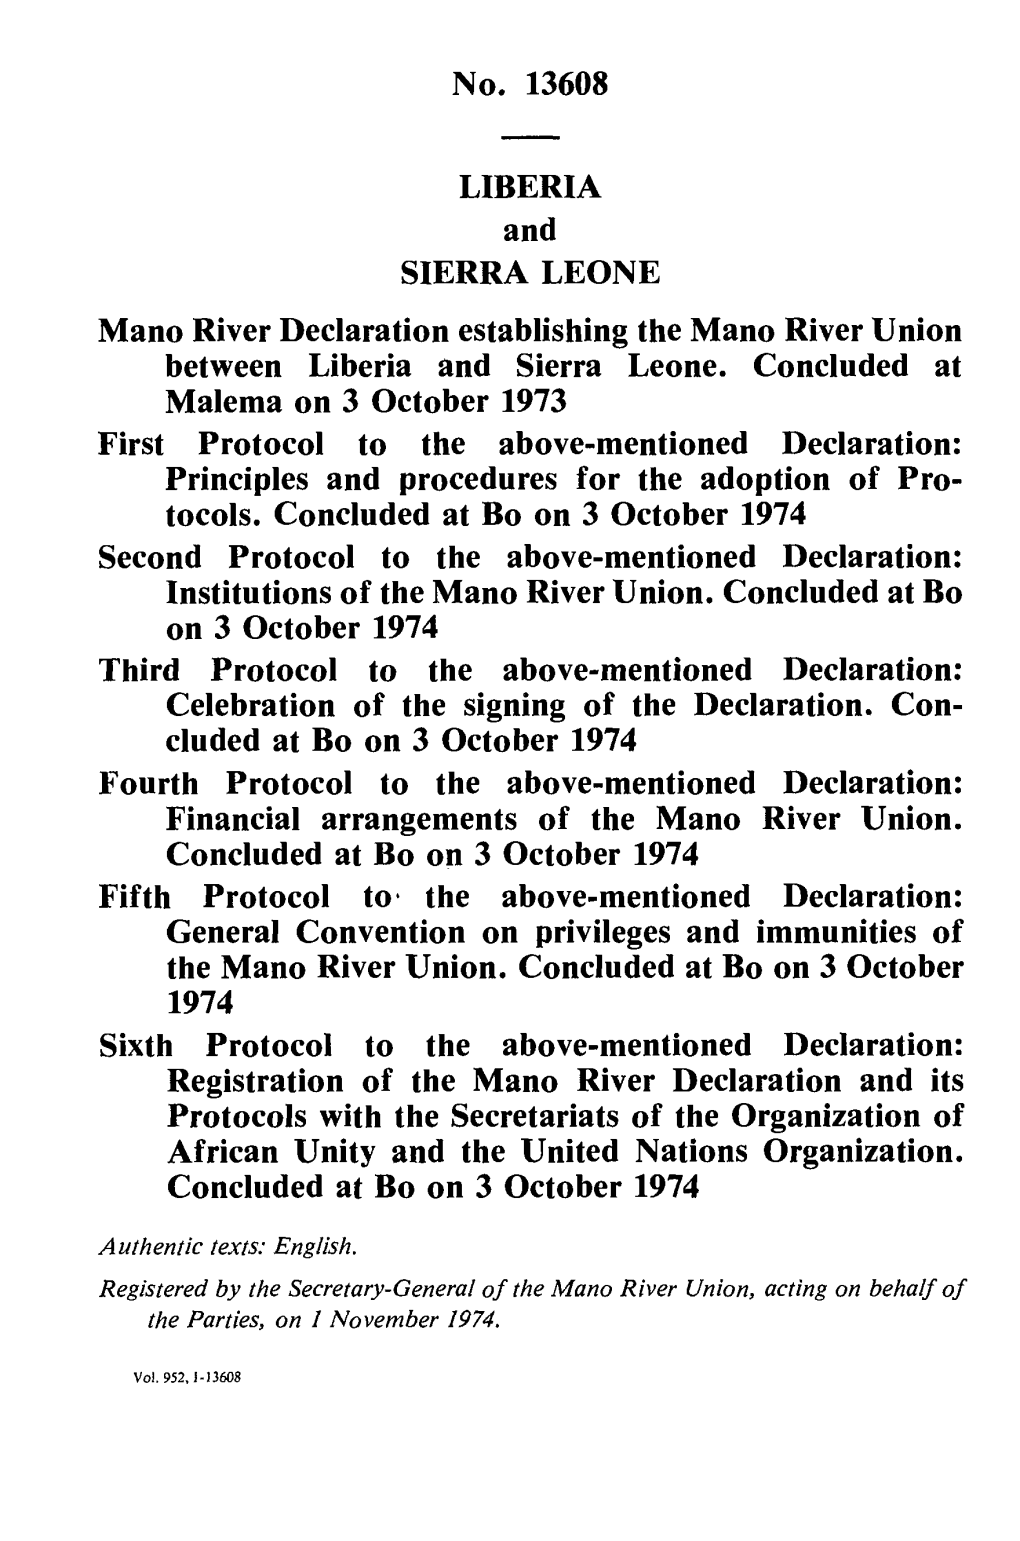 Mano River Union (MRU)